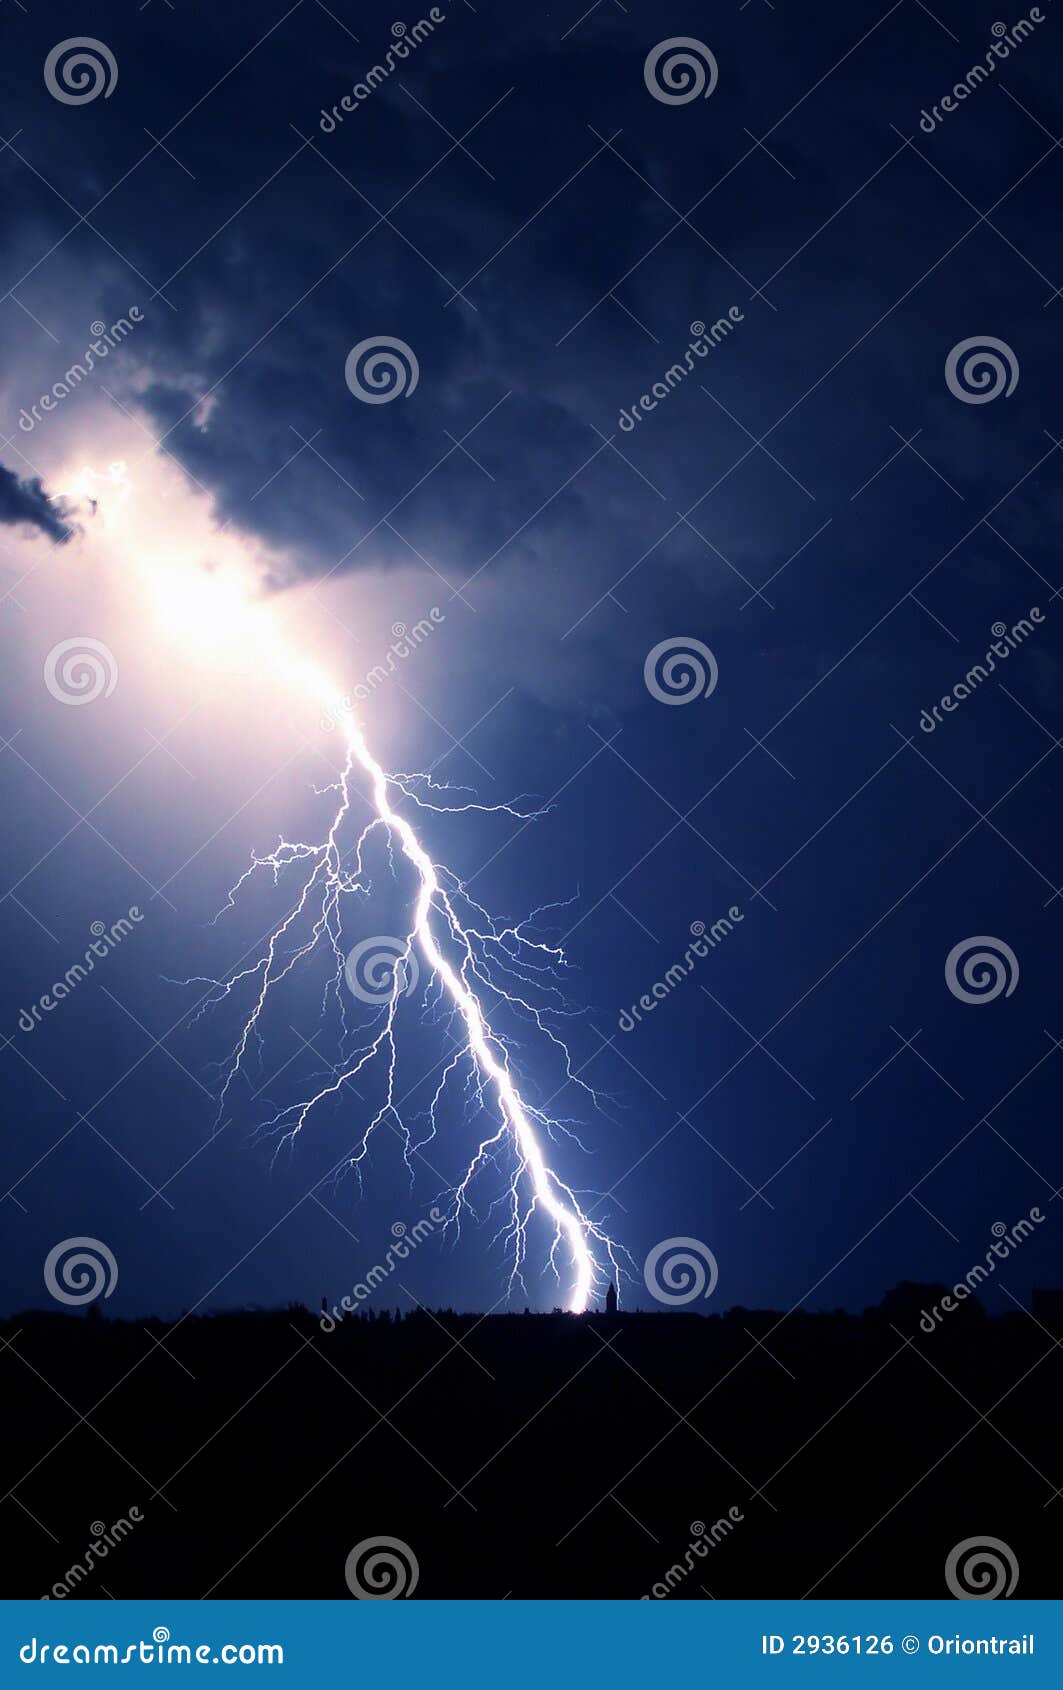 bright amazing lightning bolt